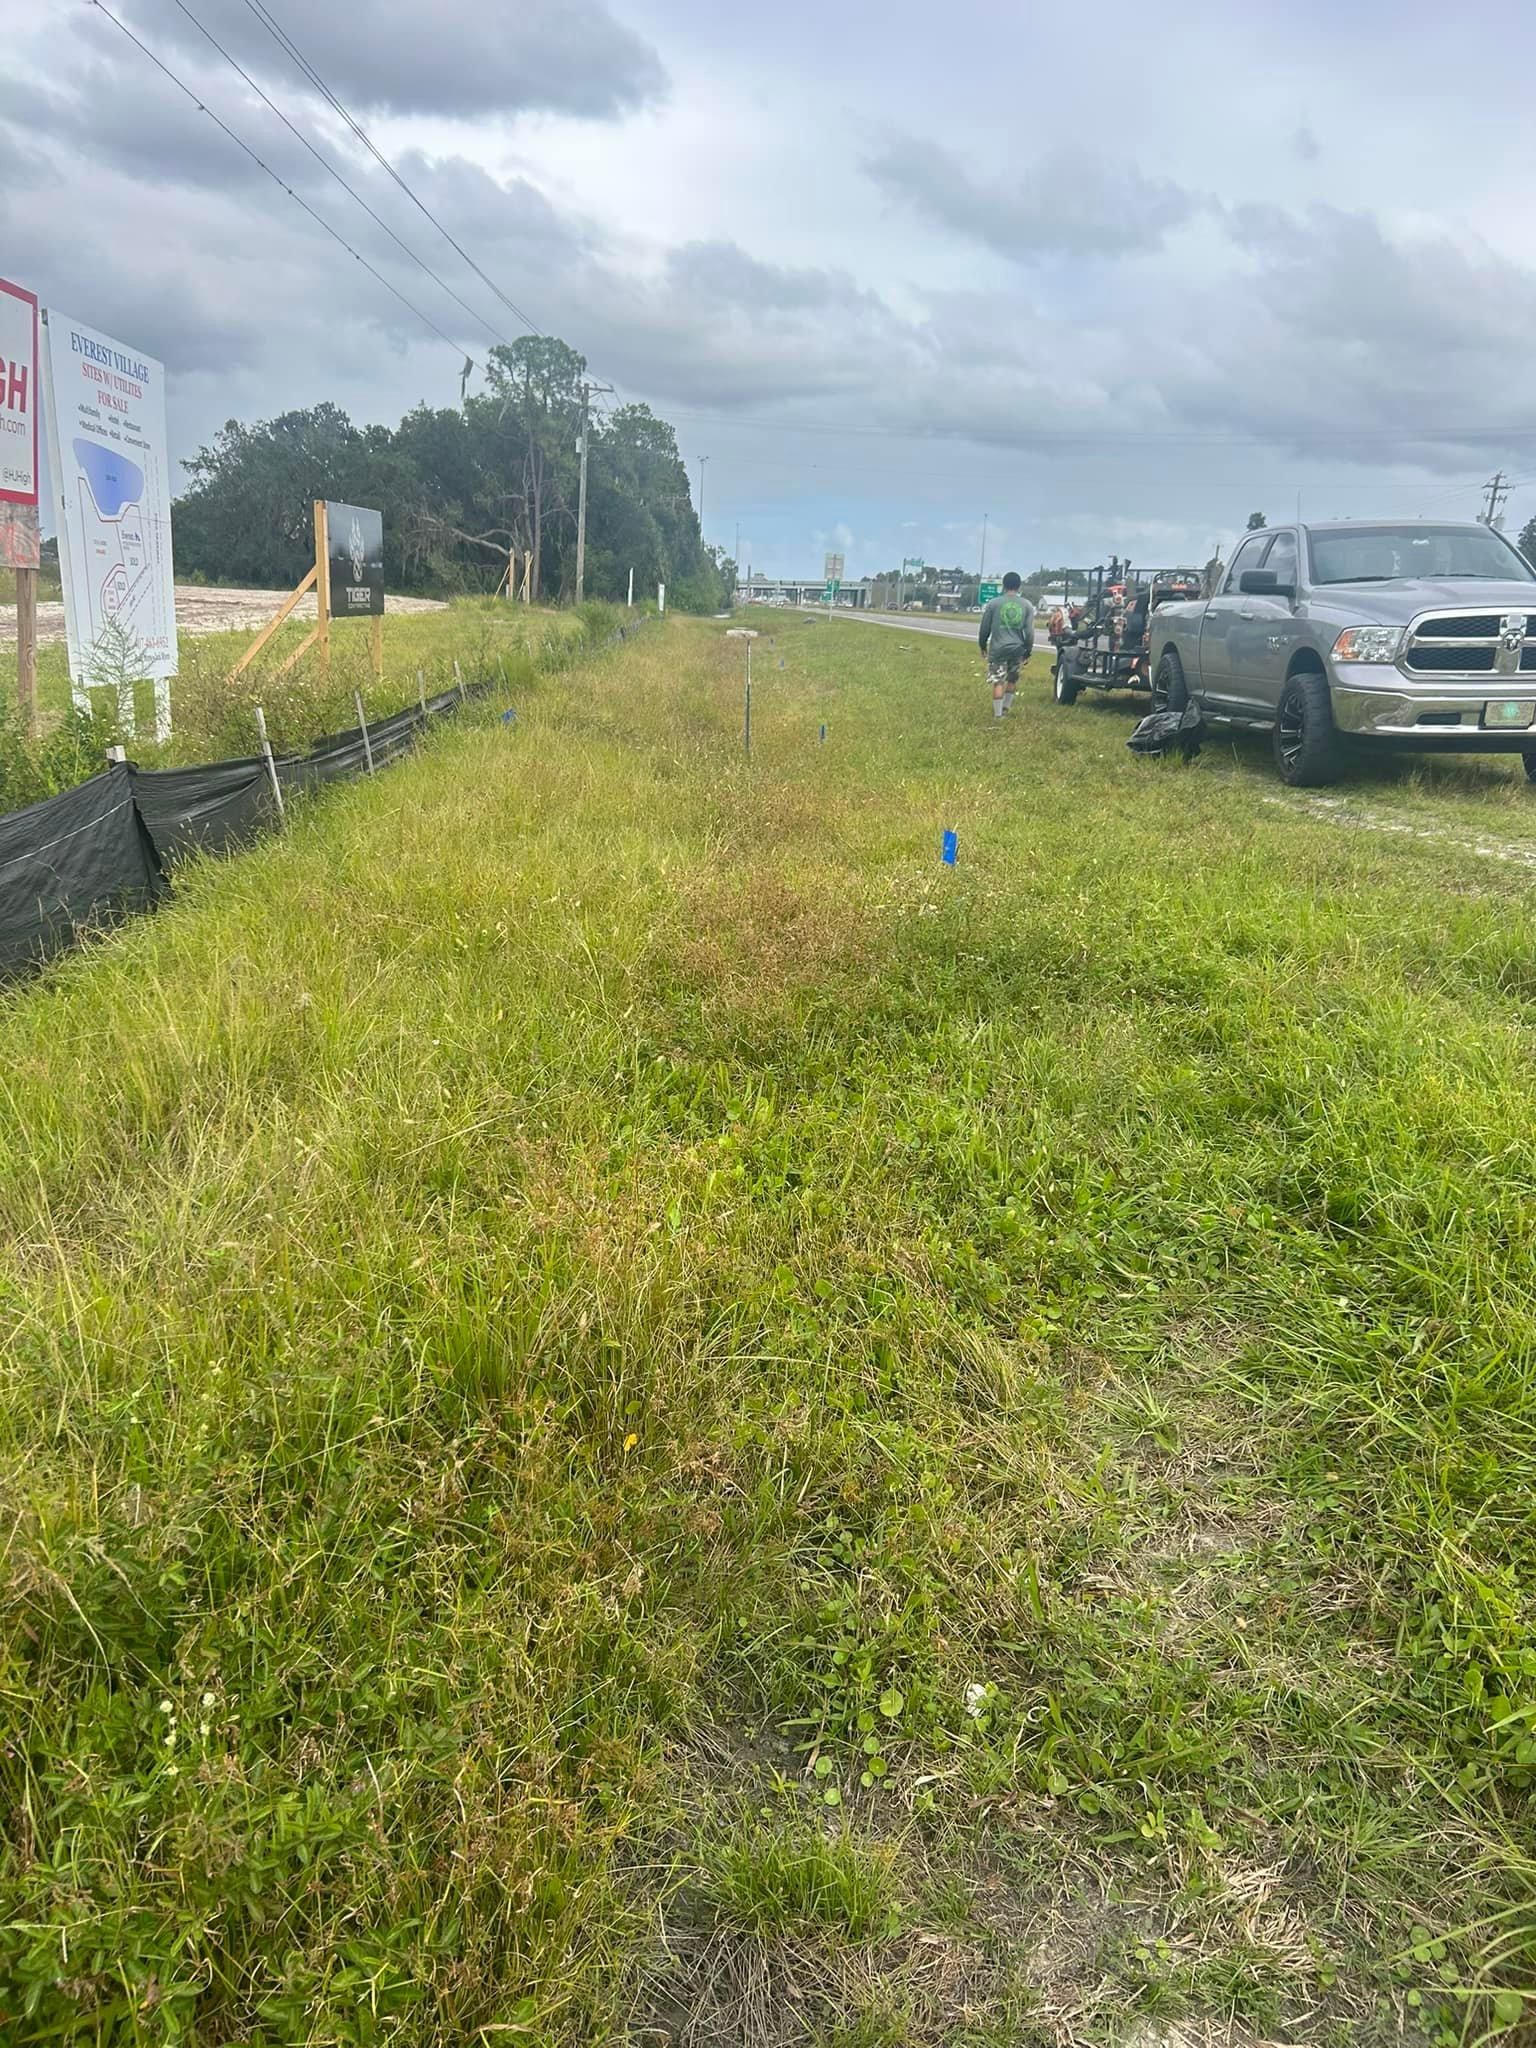 All Photos for Estrada All Pro Lawn Service in Auburndale, Florida